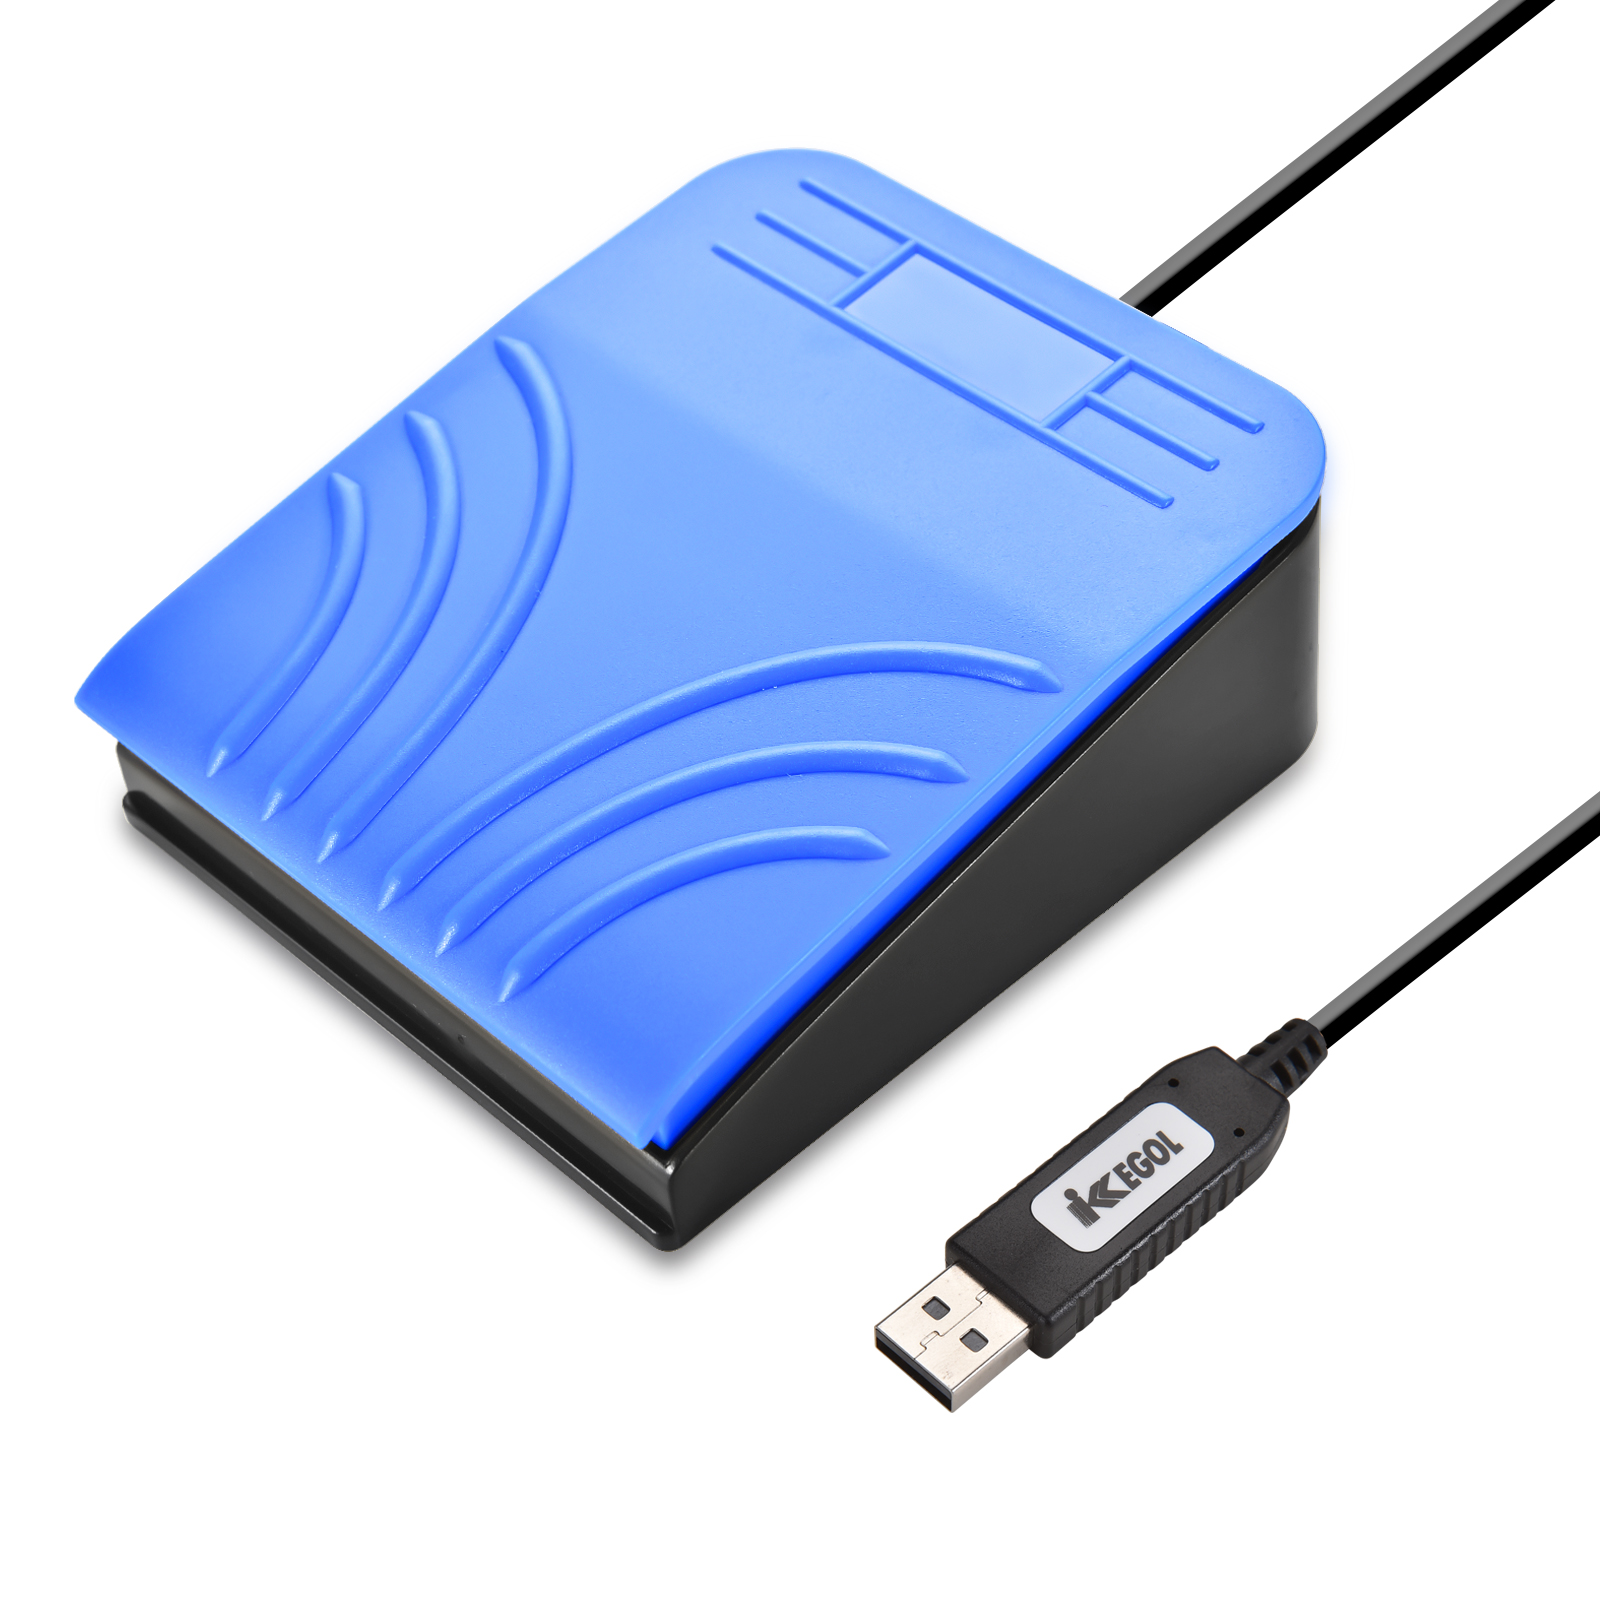 [Upgraded] iKKEGOL USB Single Foot Blue Pedal Optical Switch